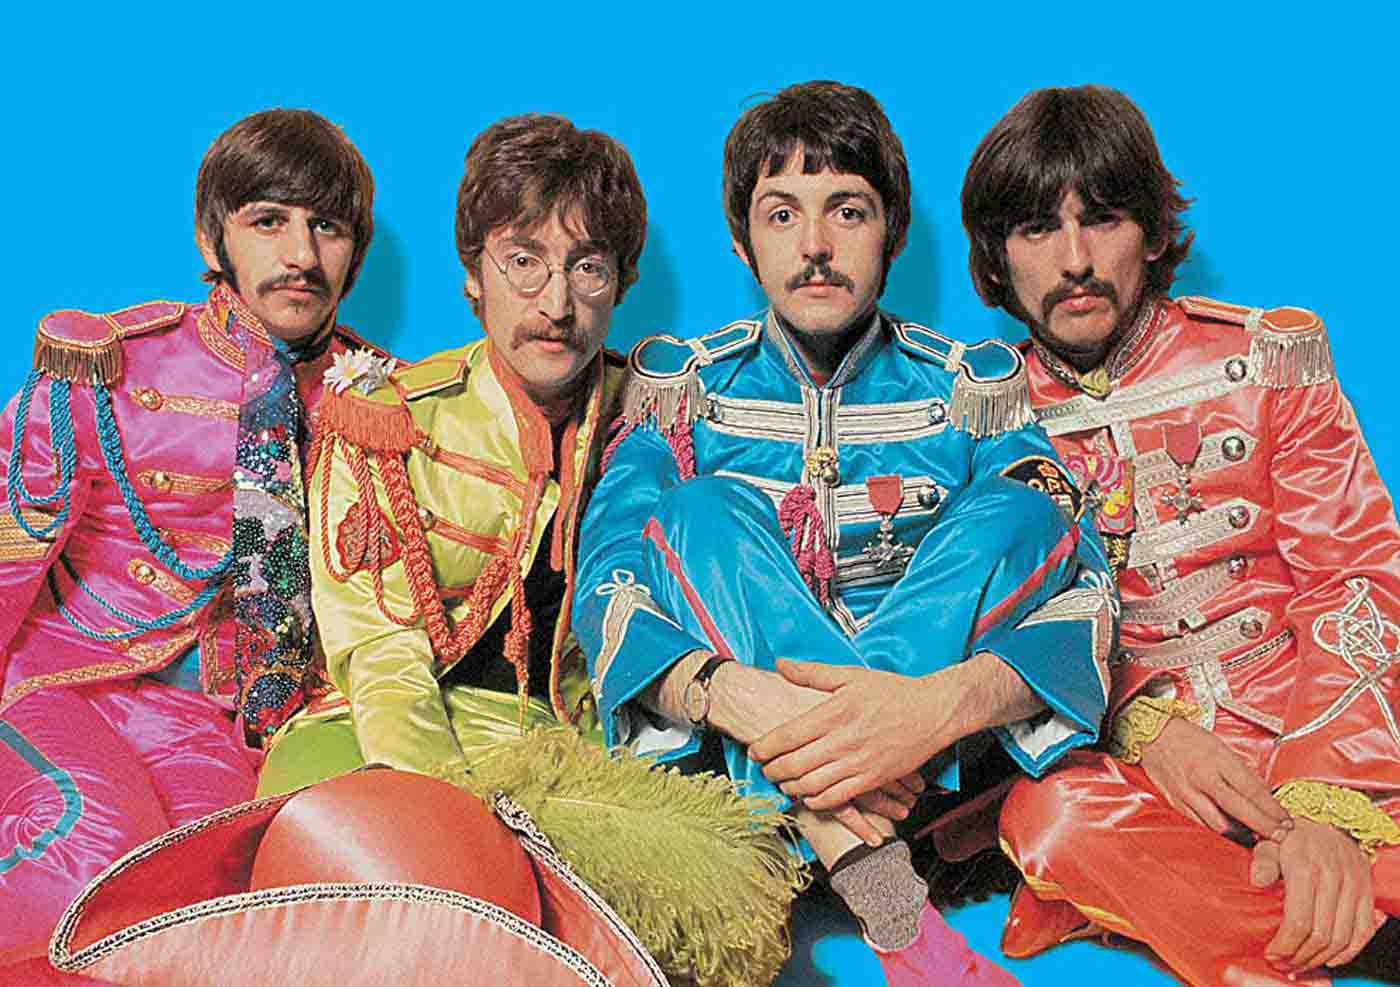 The Beatless